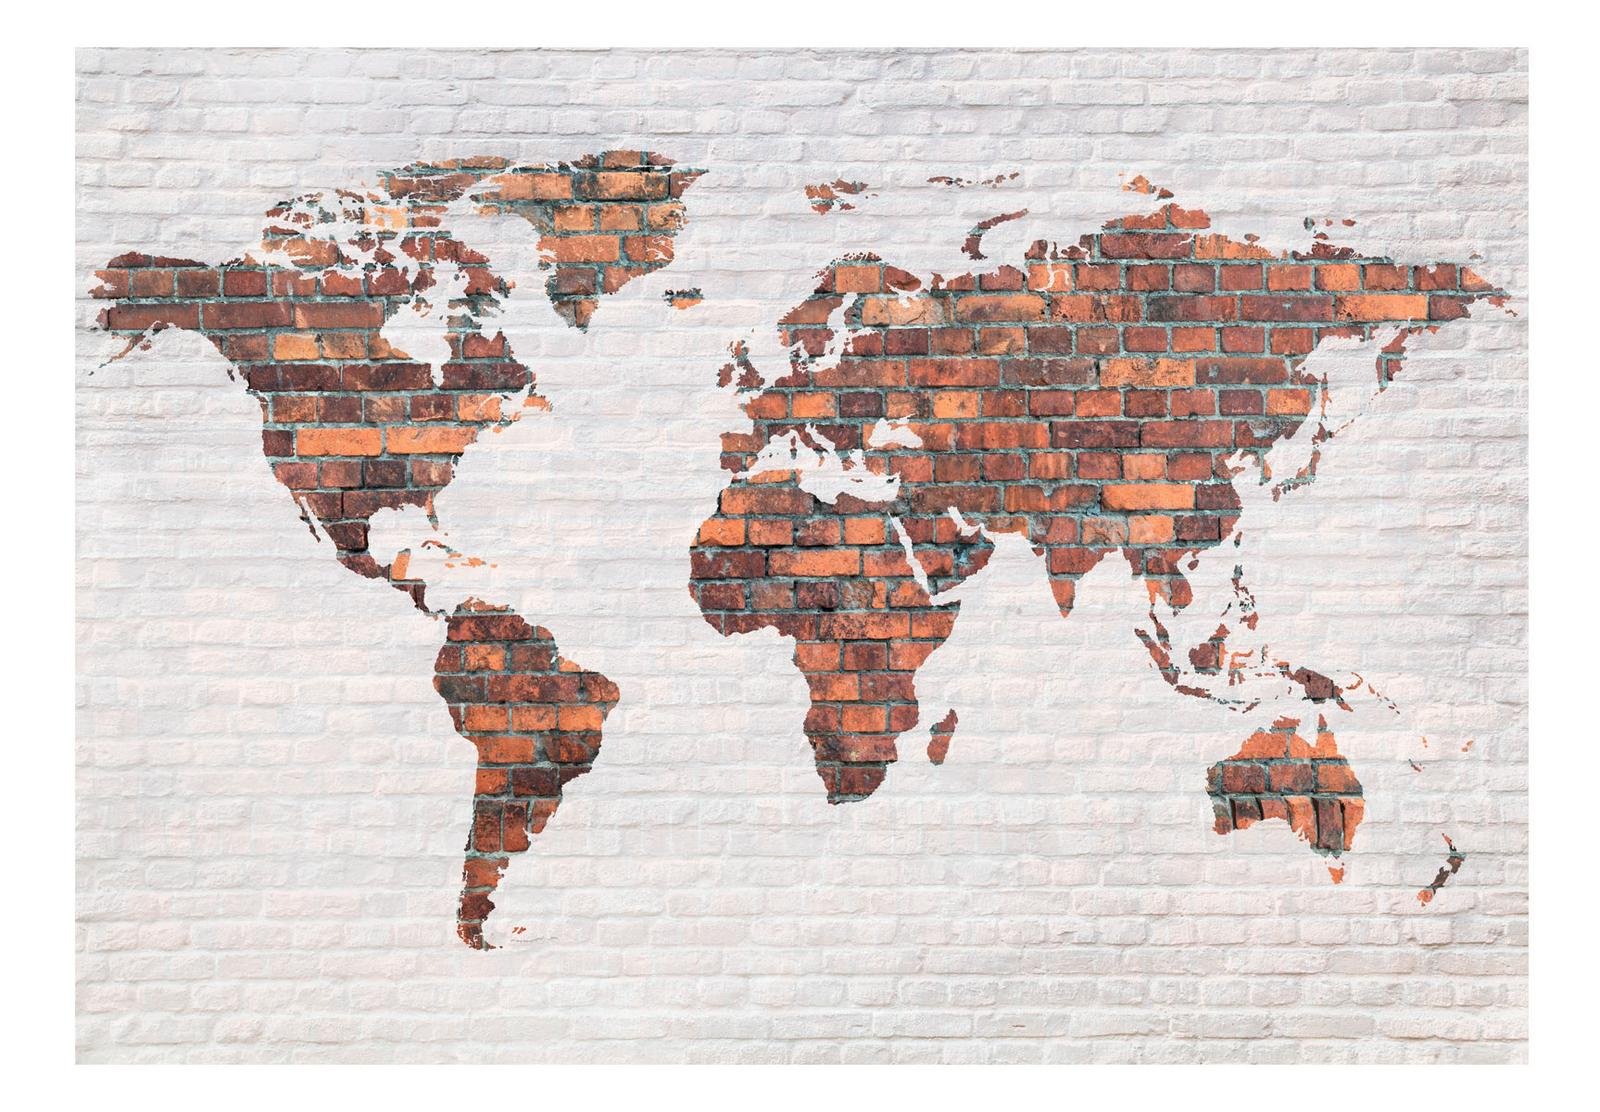 Wall mural - World Map: Brick Wall-TipTopHomeDecor